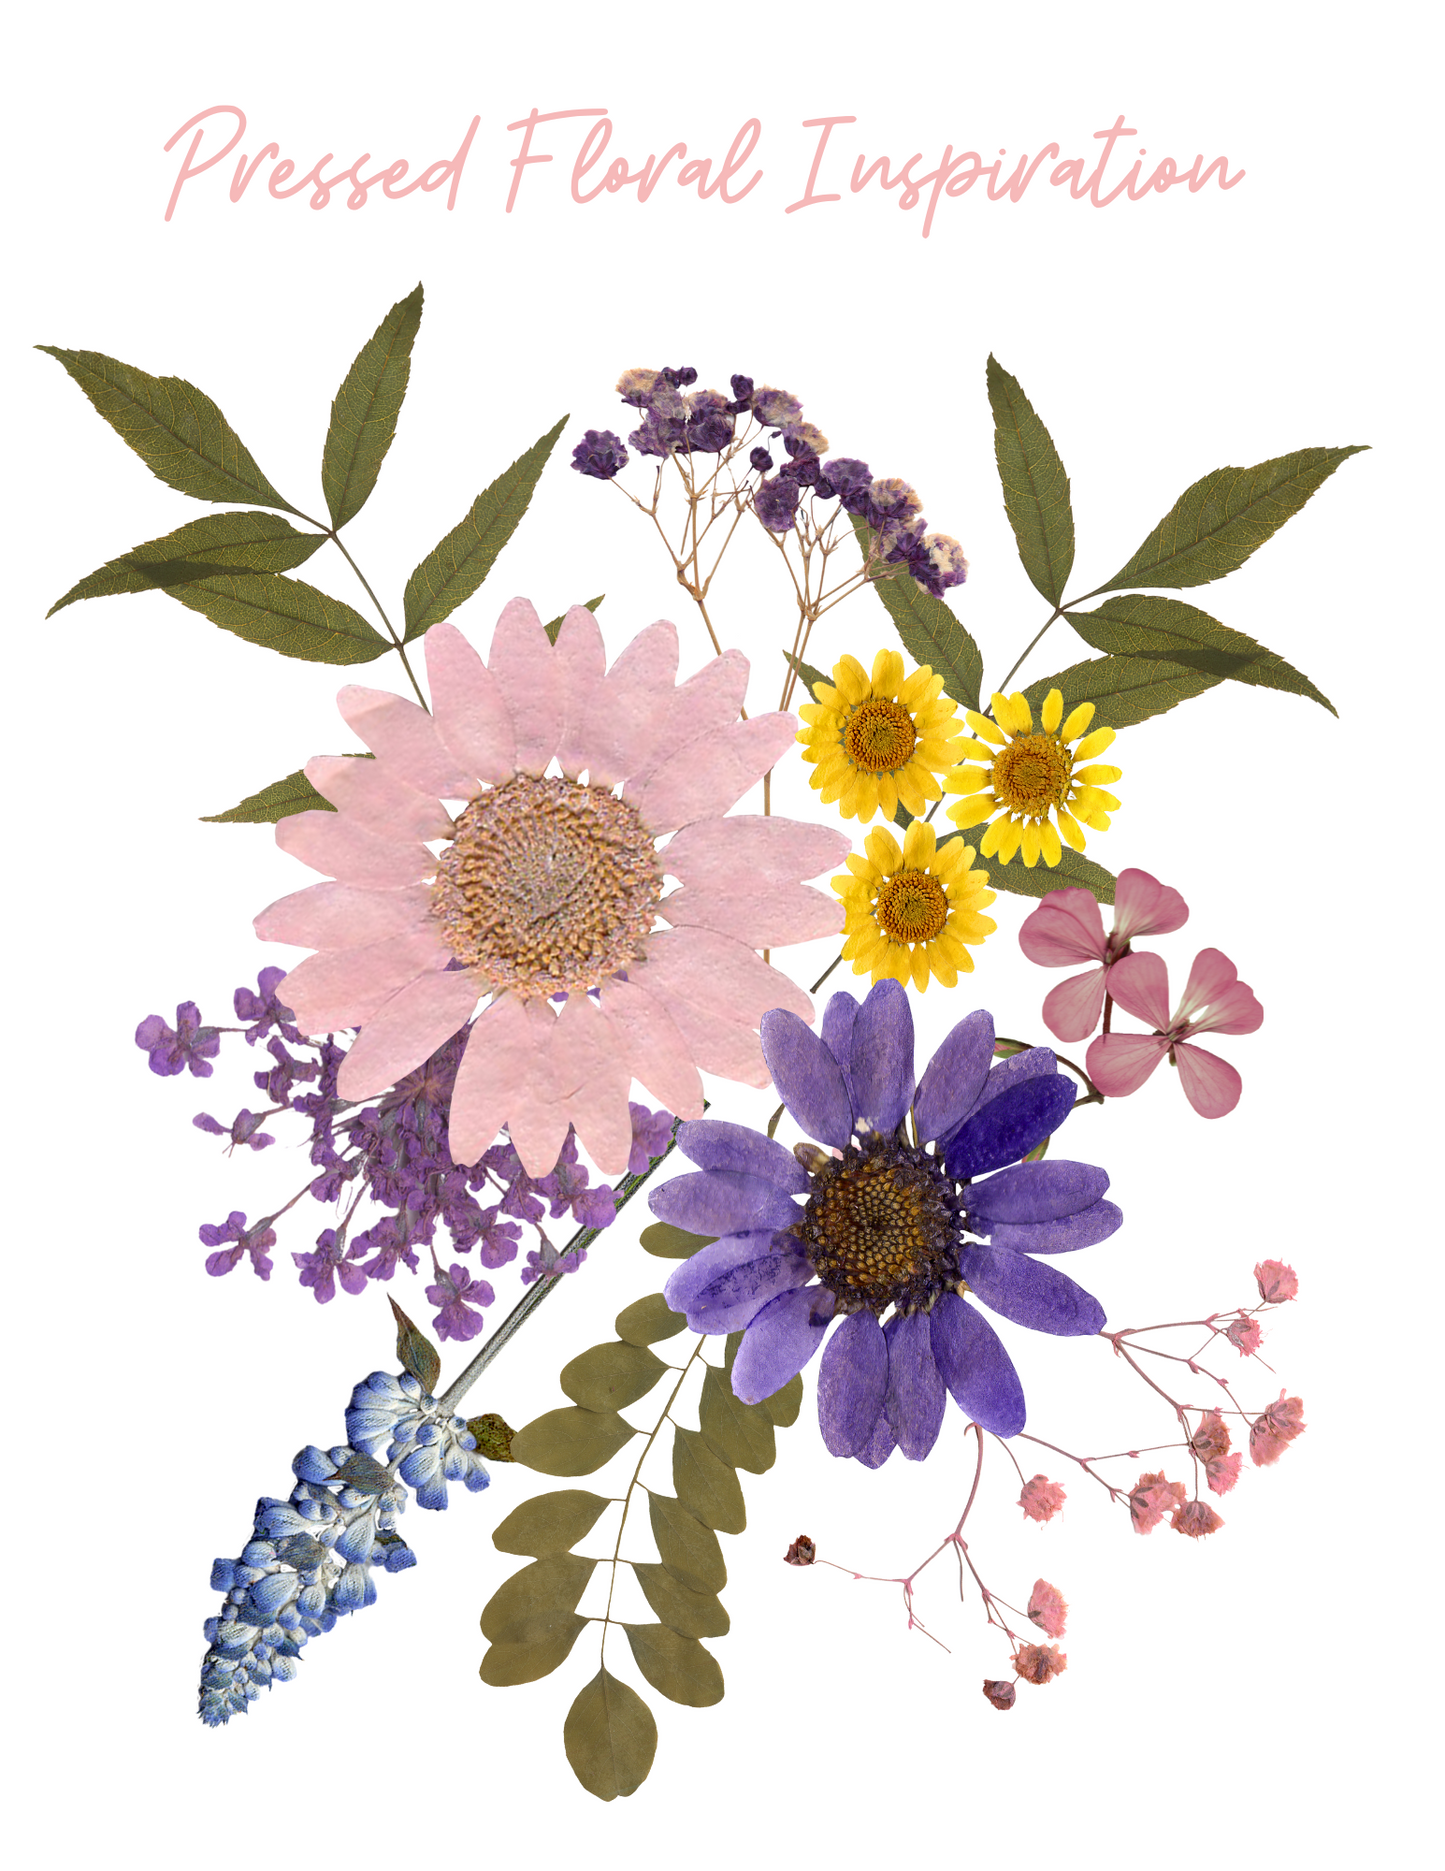 Pressed Floral Inspired Virtual Watercolor Workshop RECORDING